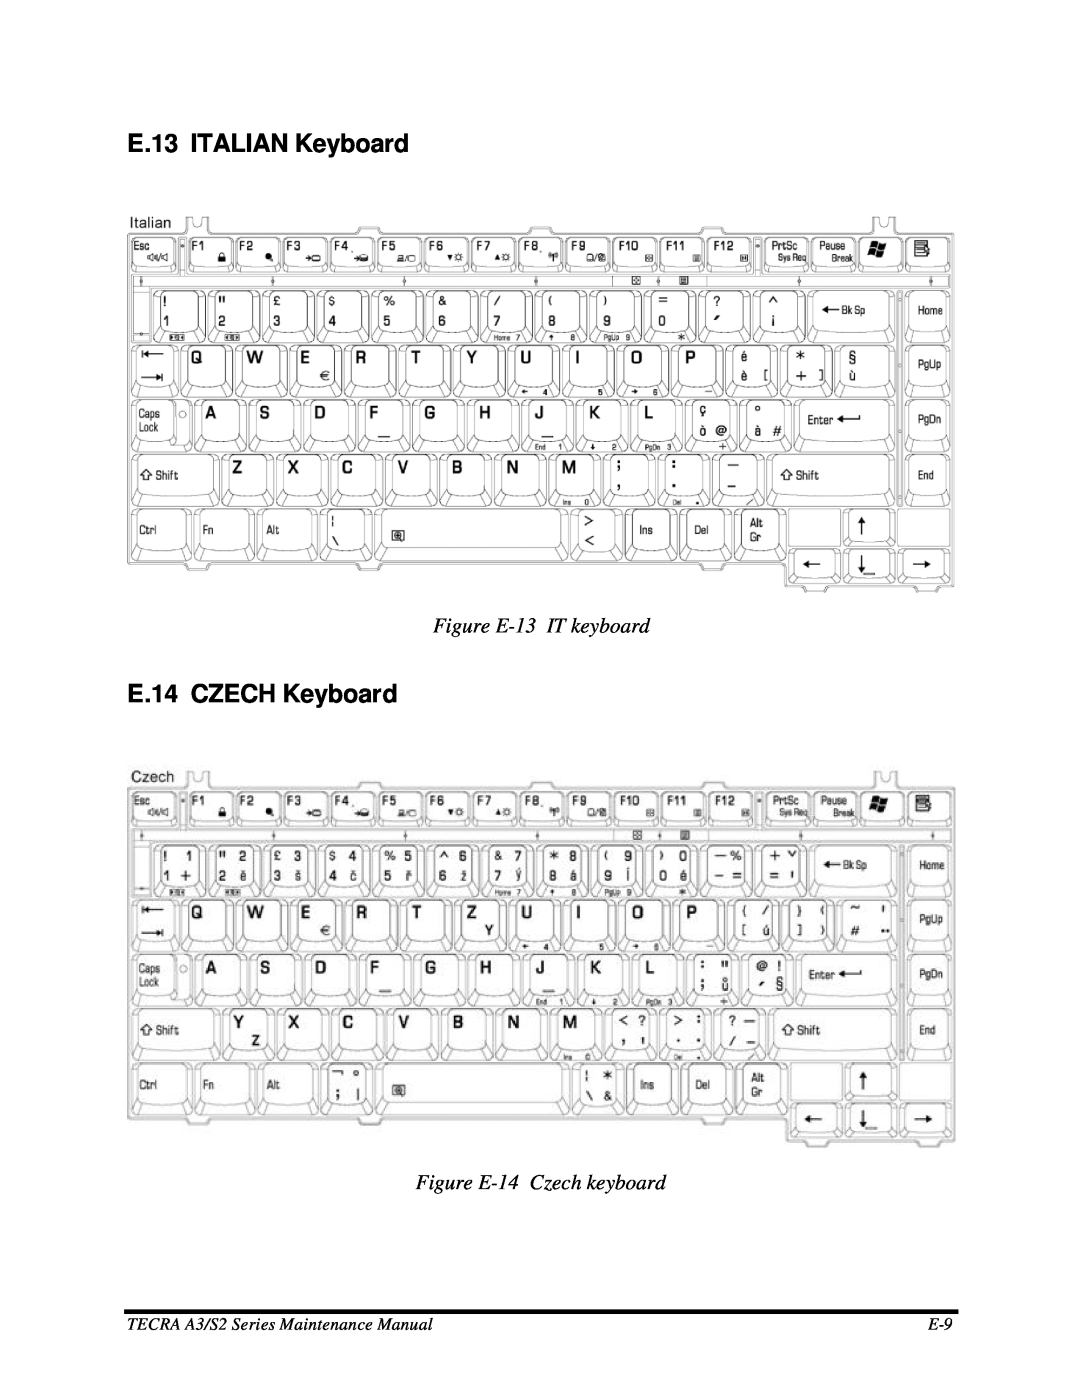 Toshiba S2 manual E.13 ITALIAN Keyboard, E.14 CZECH Keyboard, Figure E-13 IT keyboard, Figure E-14 Czech keyboard 